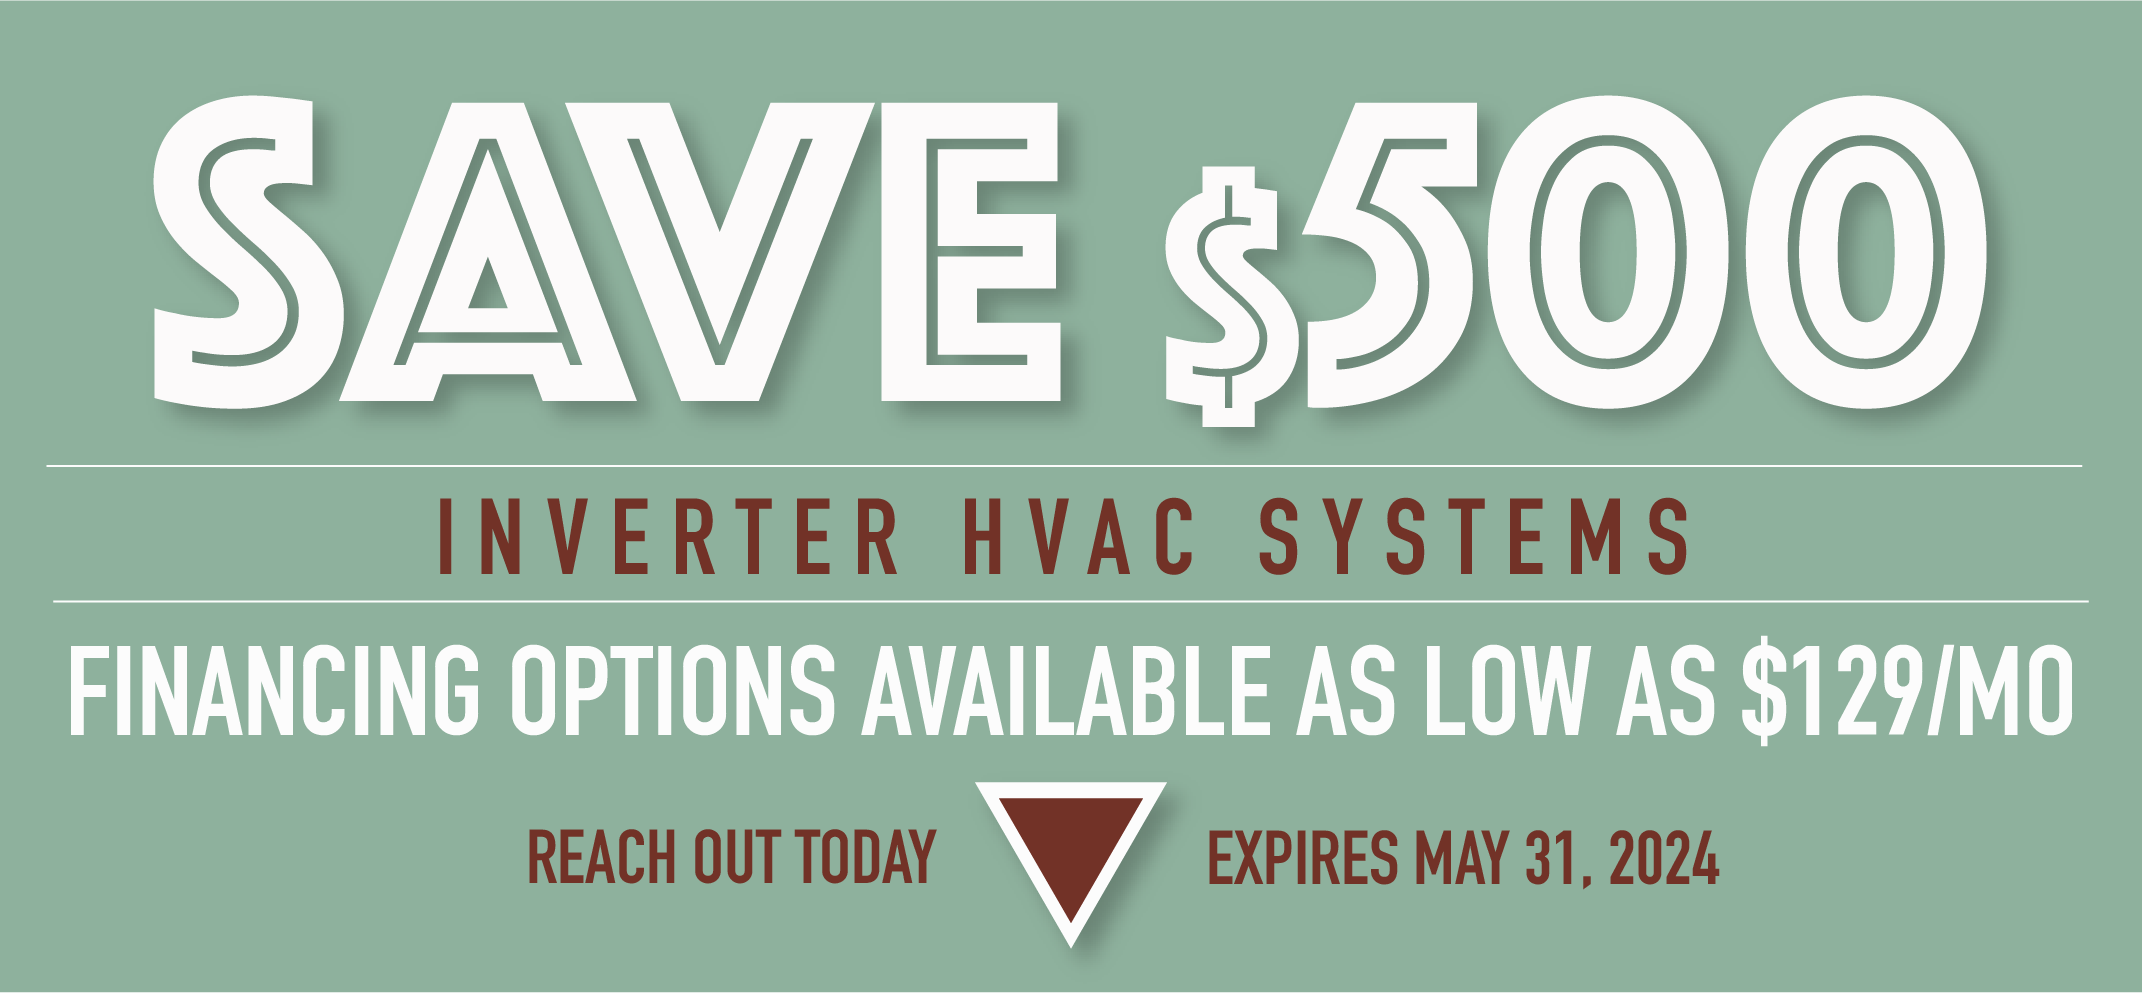 Save $500 Inverter HVAC